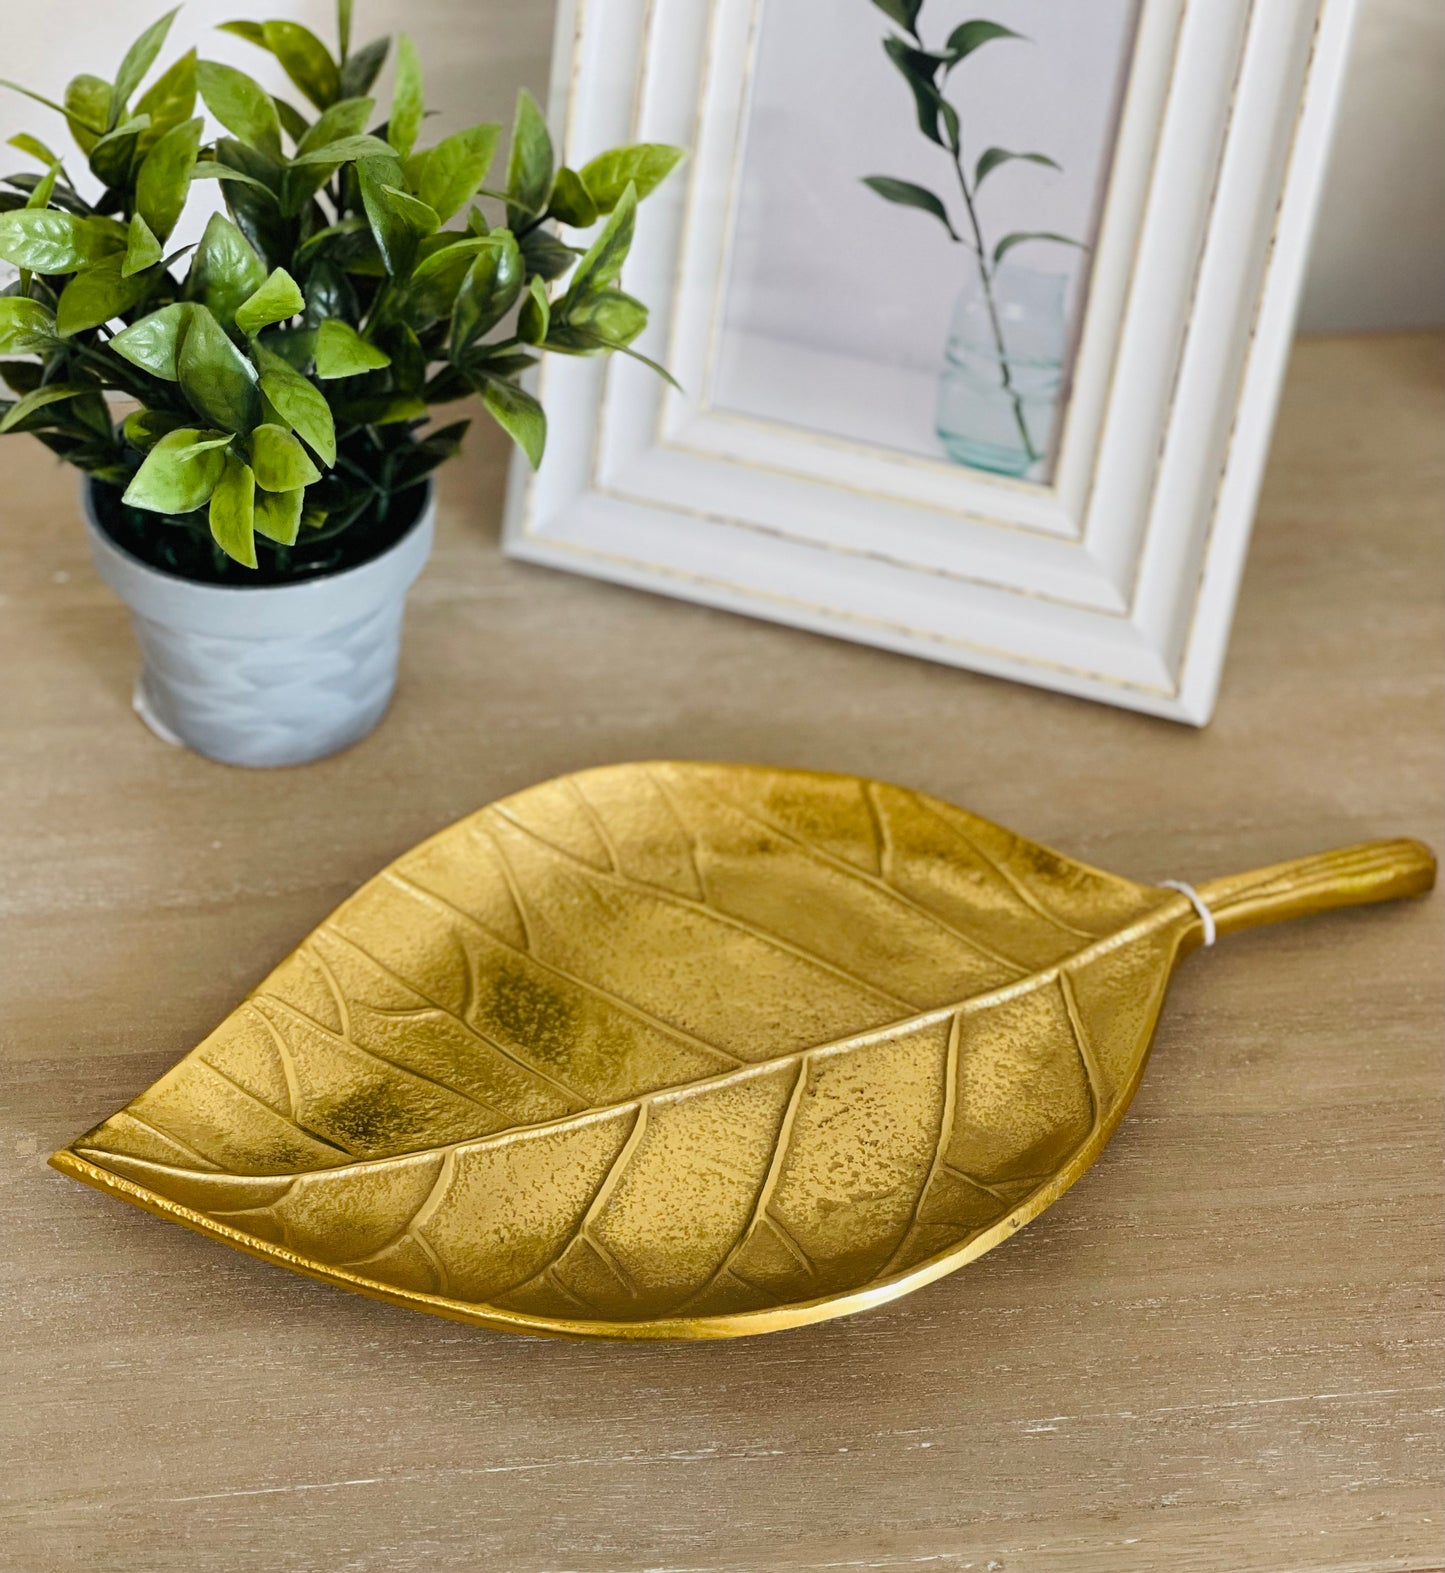 Gold Leaf Styling Tray